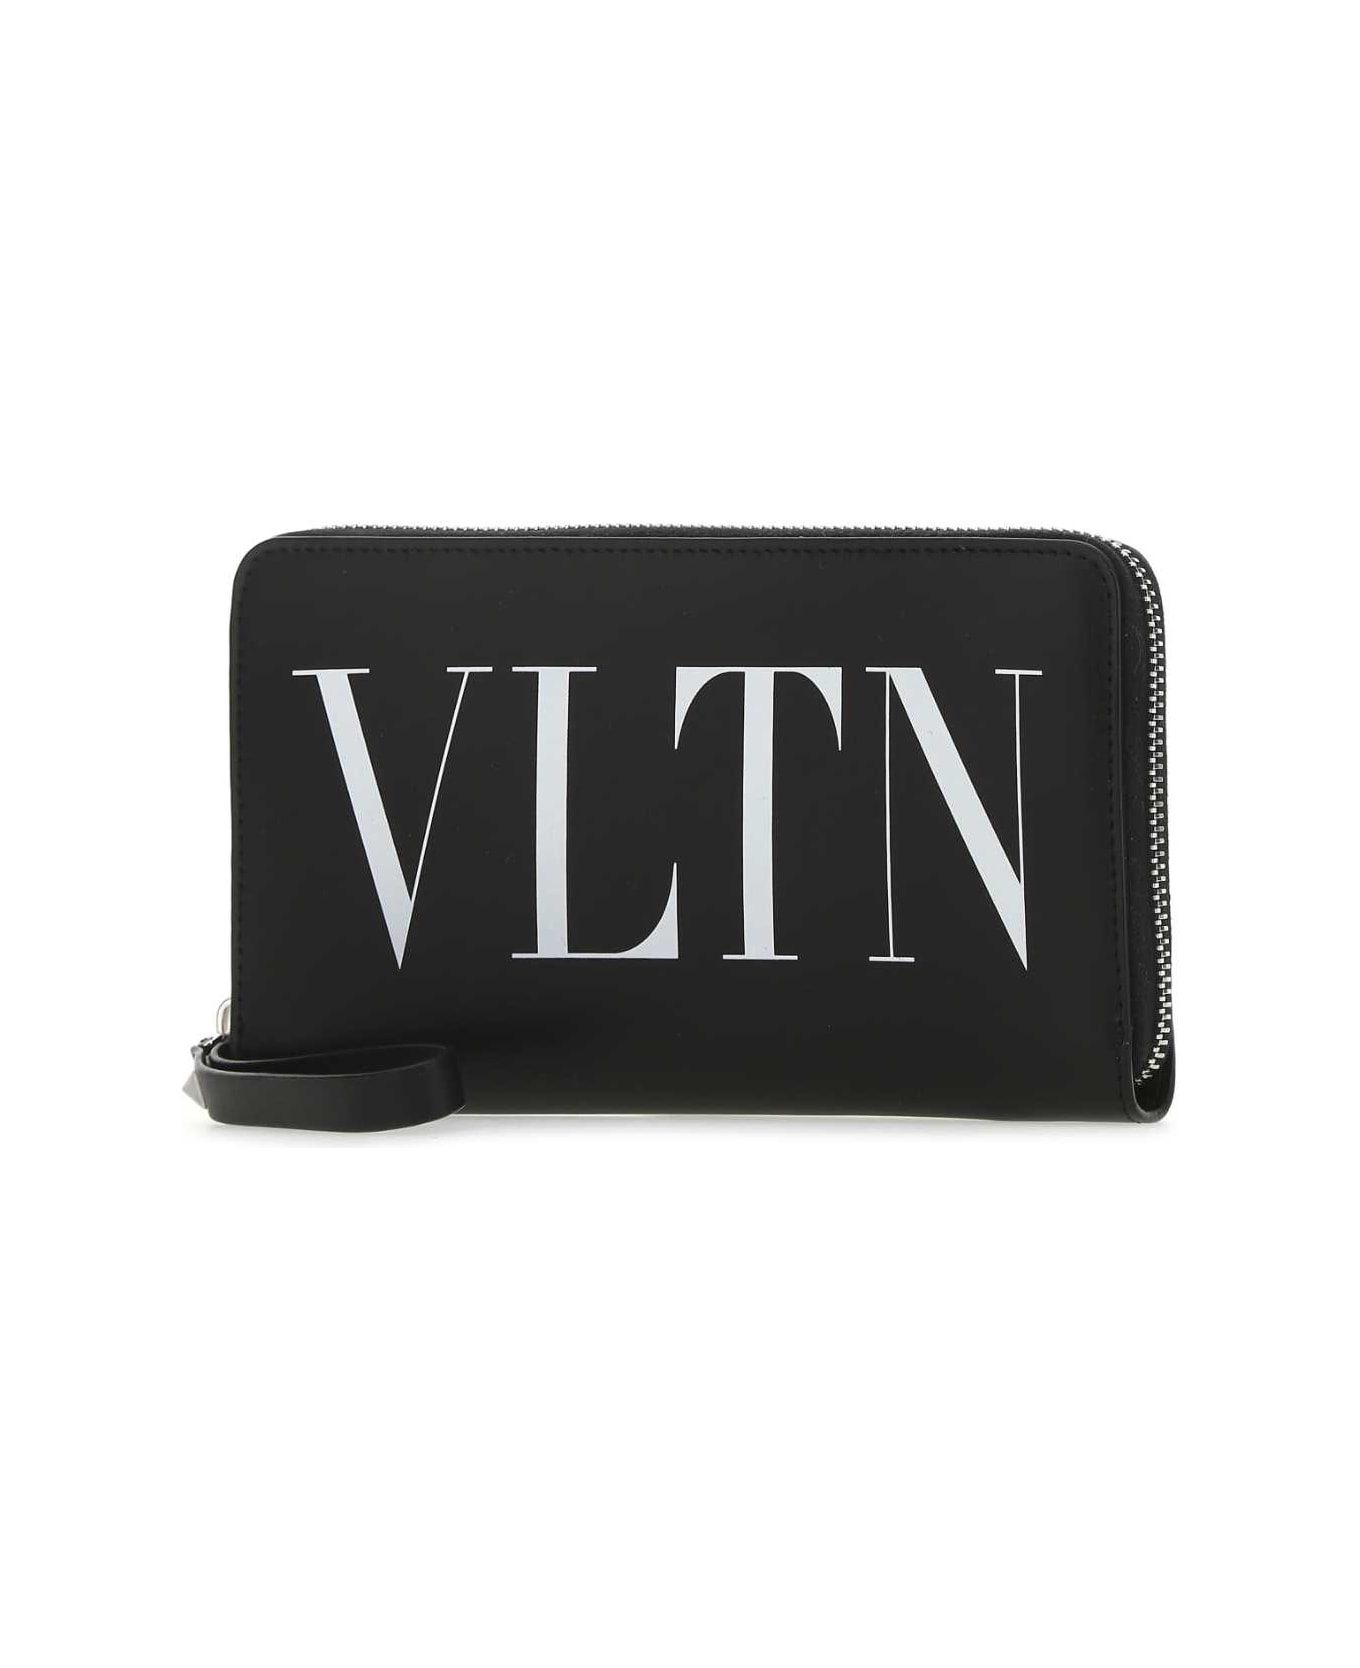 Valentino check Garavani Black Leather Vltn Wallet - NEROBIANCO